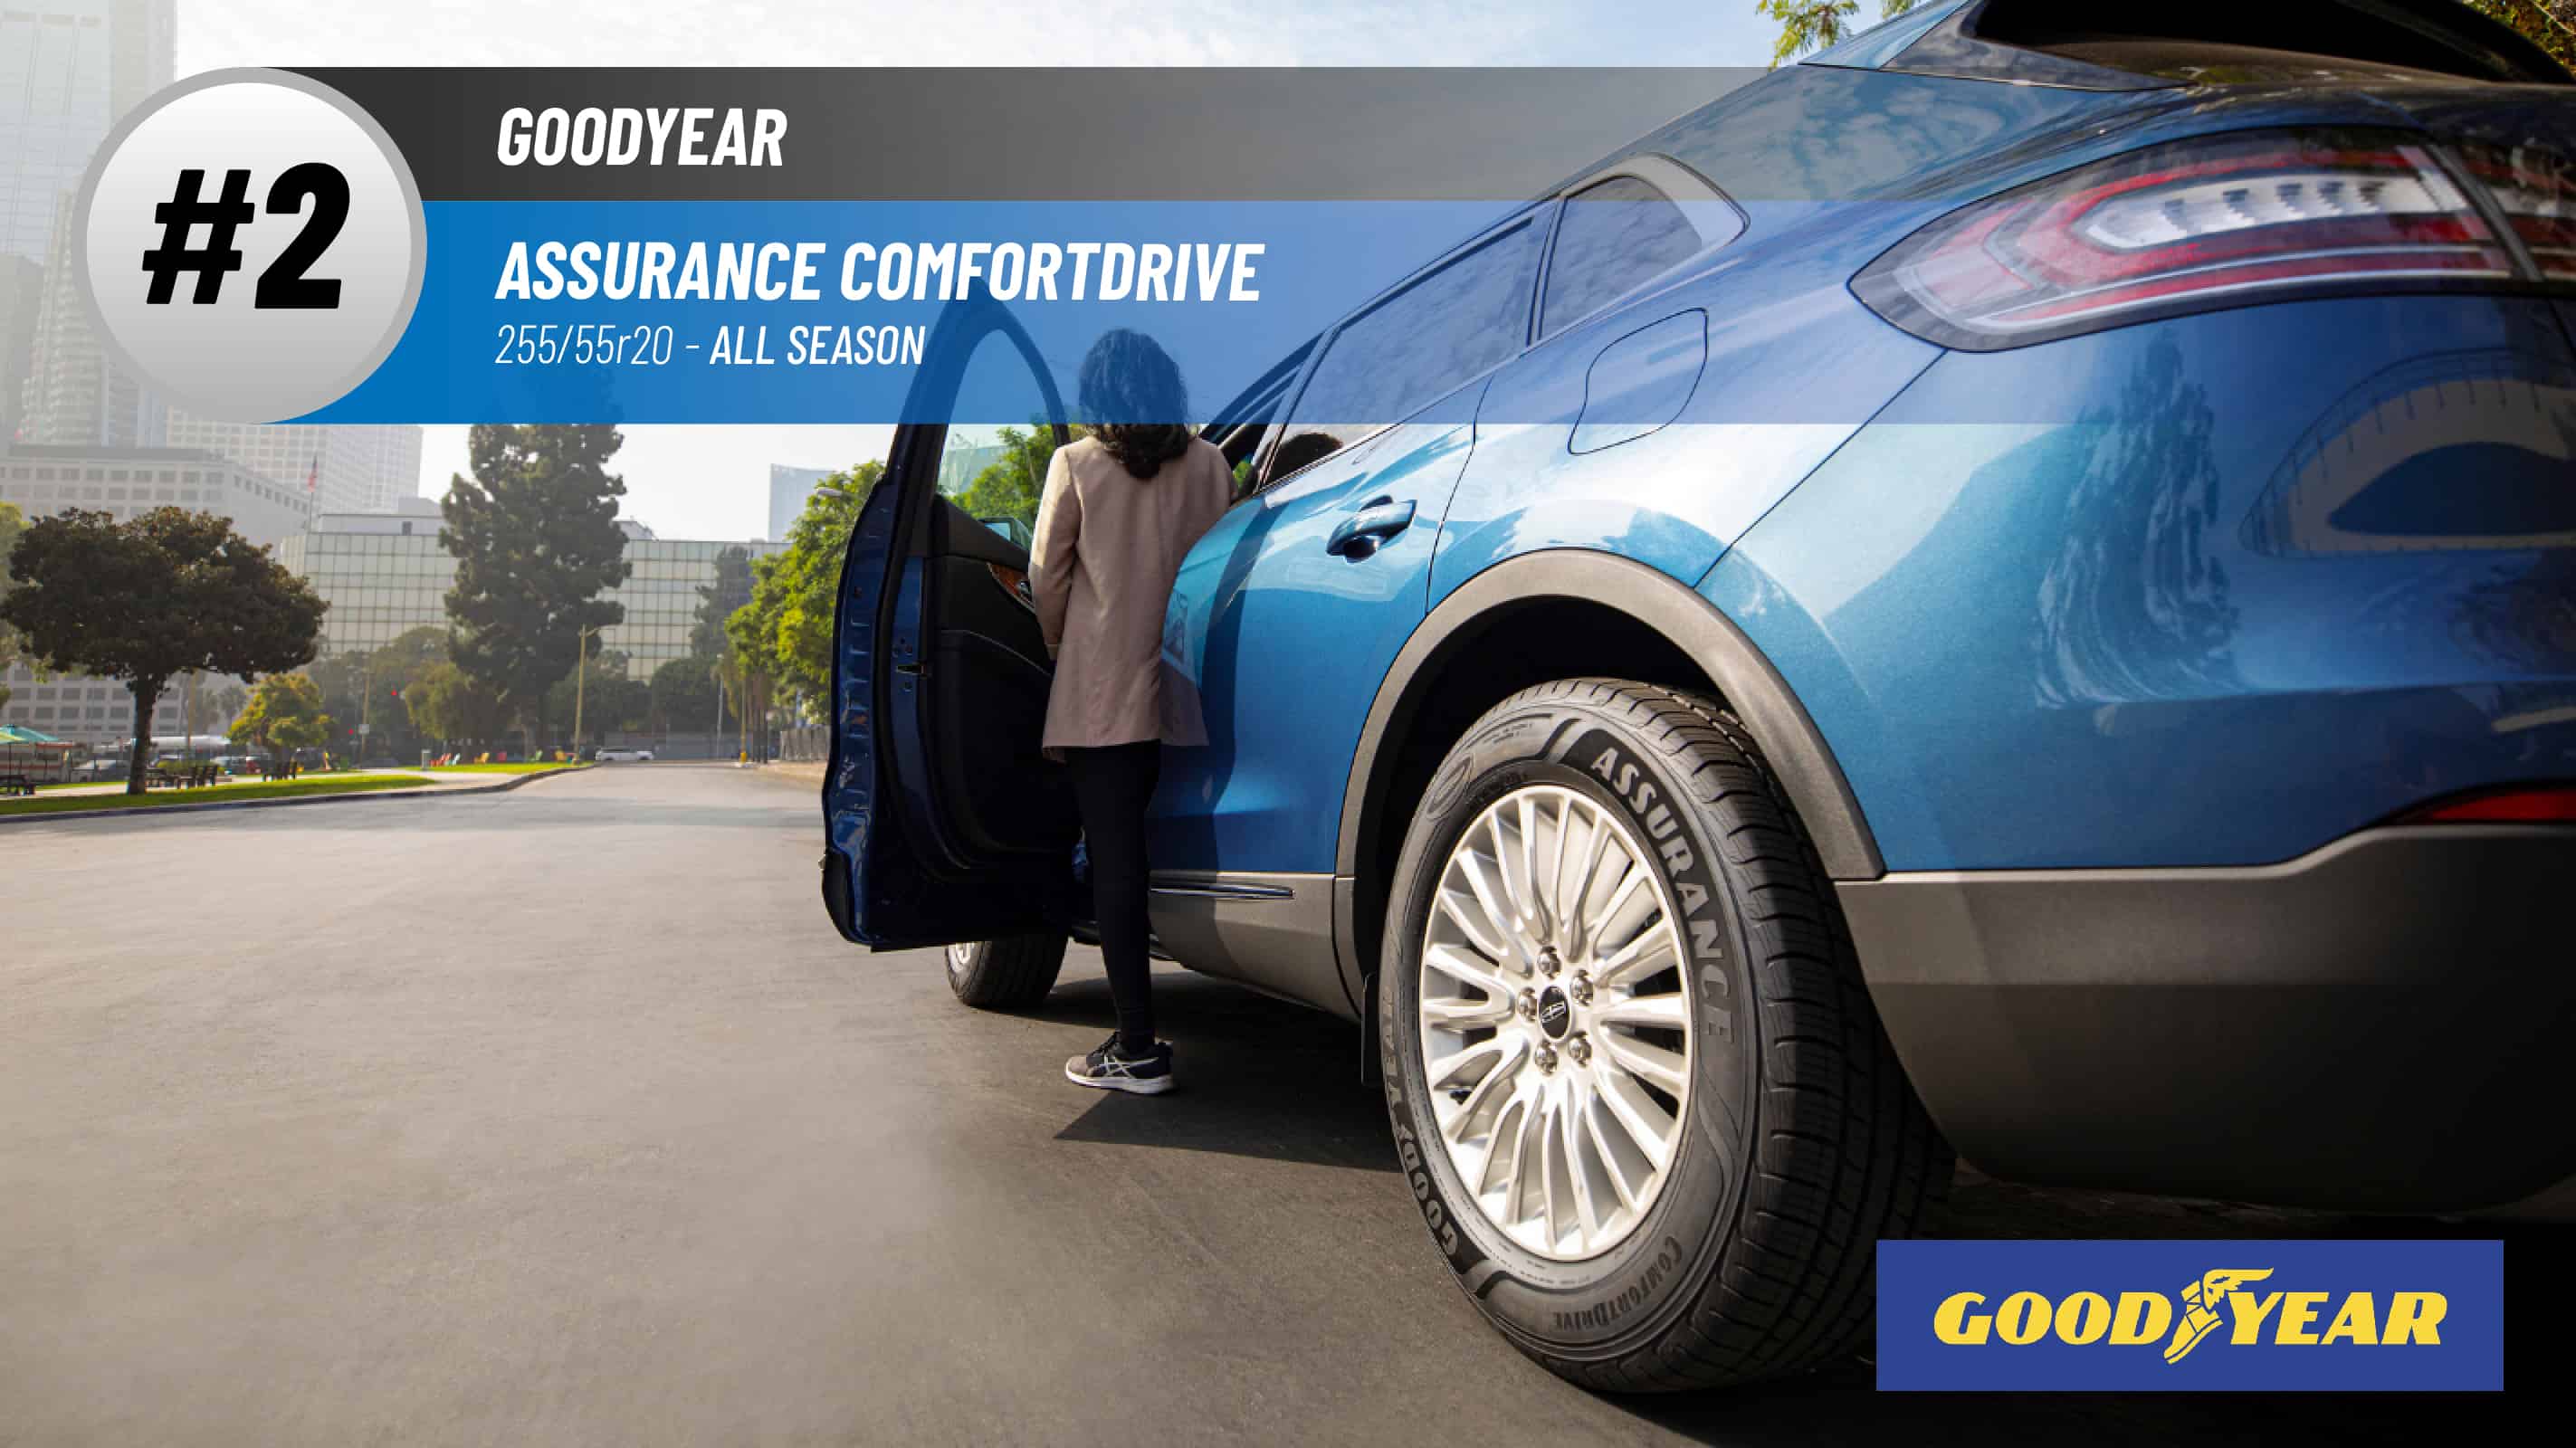 Top #2 All Season Tires: Goodyear Assurance Comfortdrive – best 255/55r20